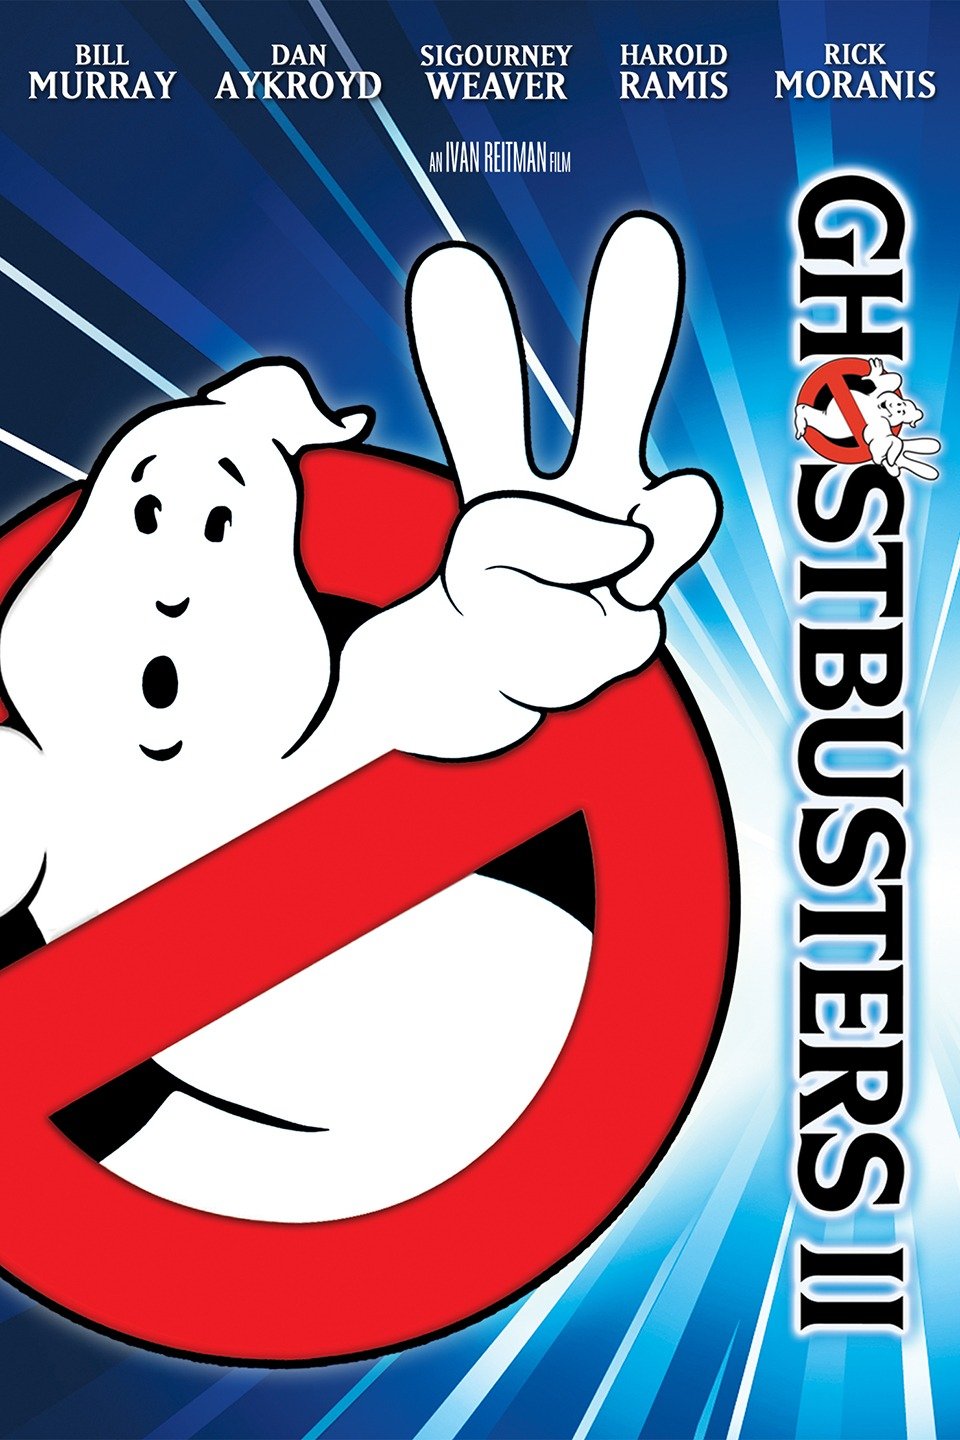 [MINI Super-HQ] Ghostbusters II (1989) บริษัทกำจัดผี ภาค 2 [1080p] [พากย์ไทย 5.1 + เสียงอังกฤษ DTS] [บรรยายไทย + อังกฤษ] [เสียงไทย + ซับไทย] [OPENLOAD]